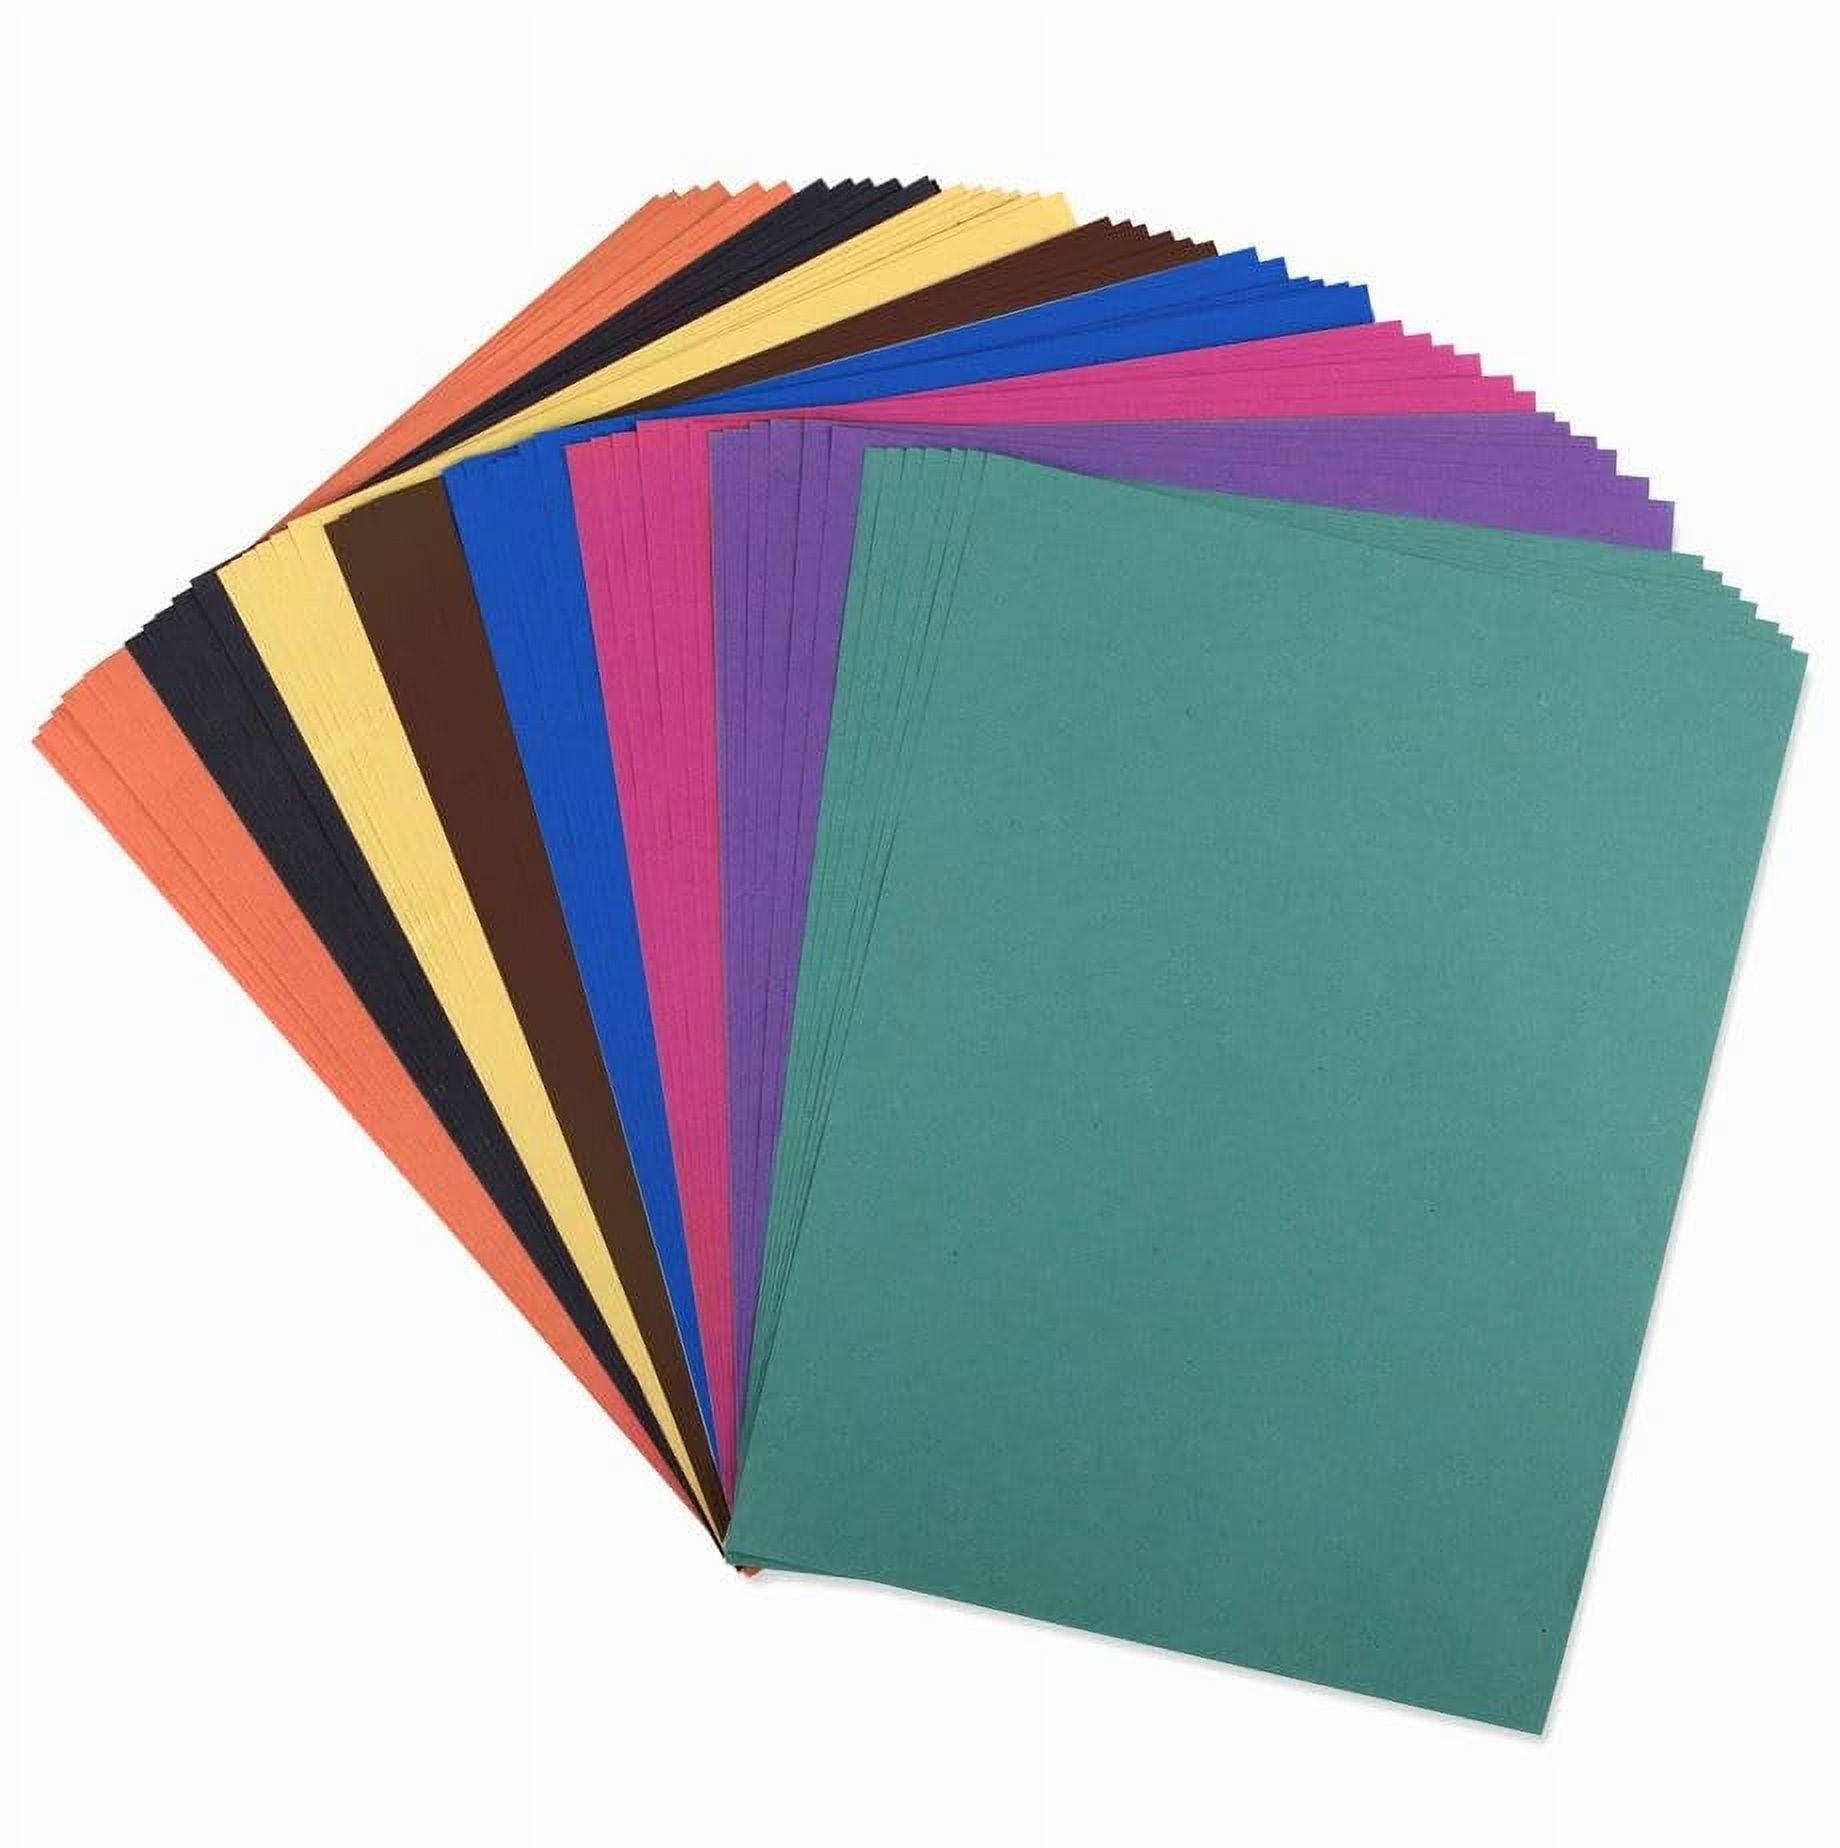 Riteco Construction Paper - Dark Blue, 12 inch x 18 inch, 50 Sheets